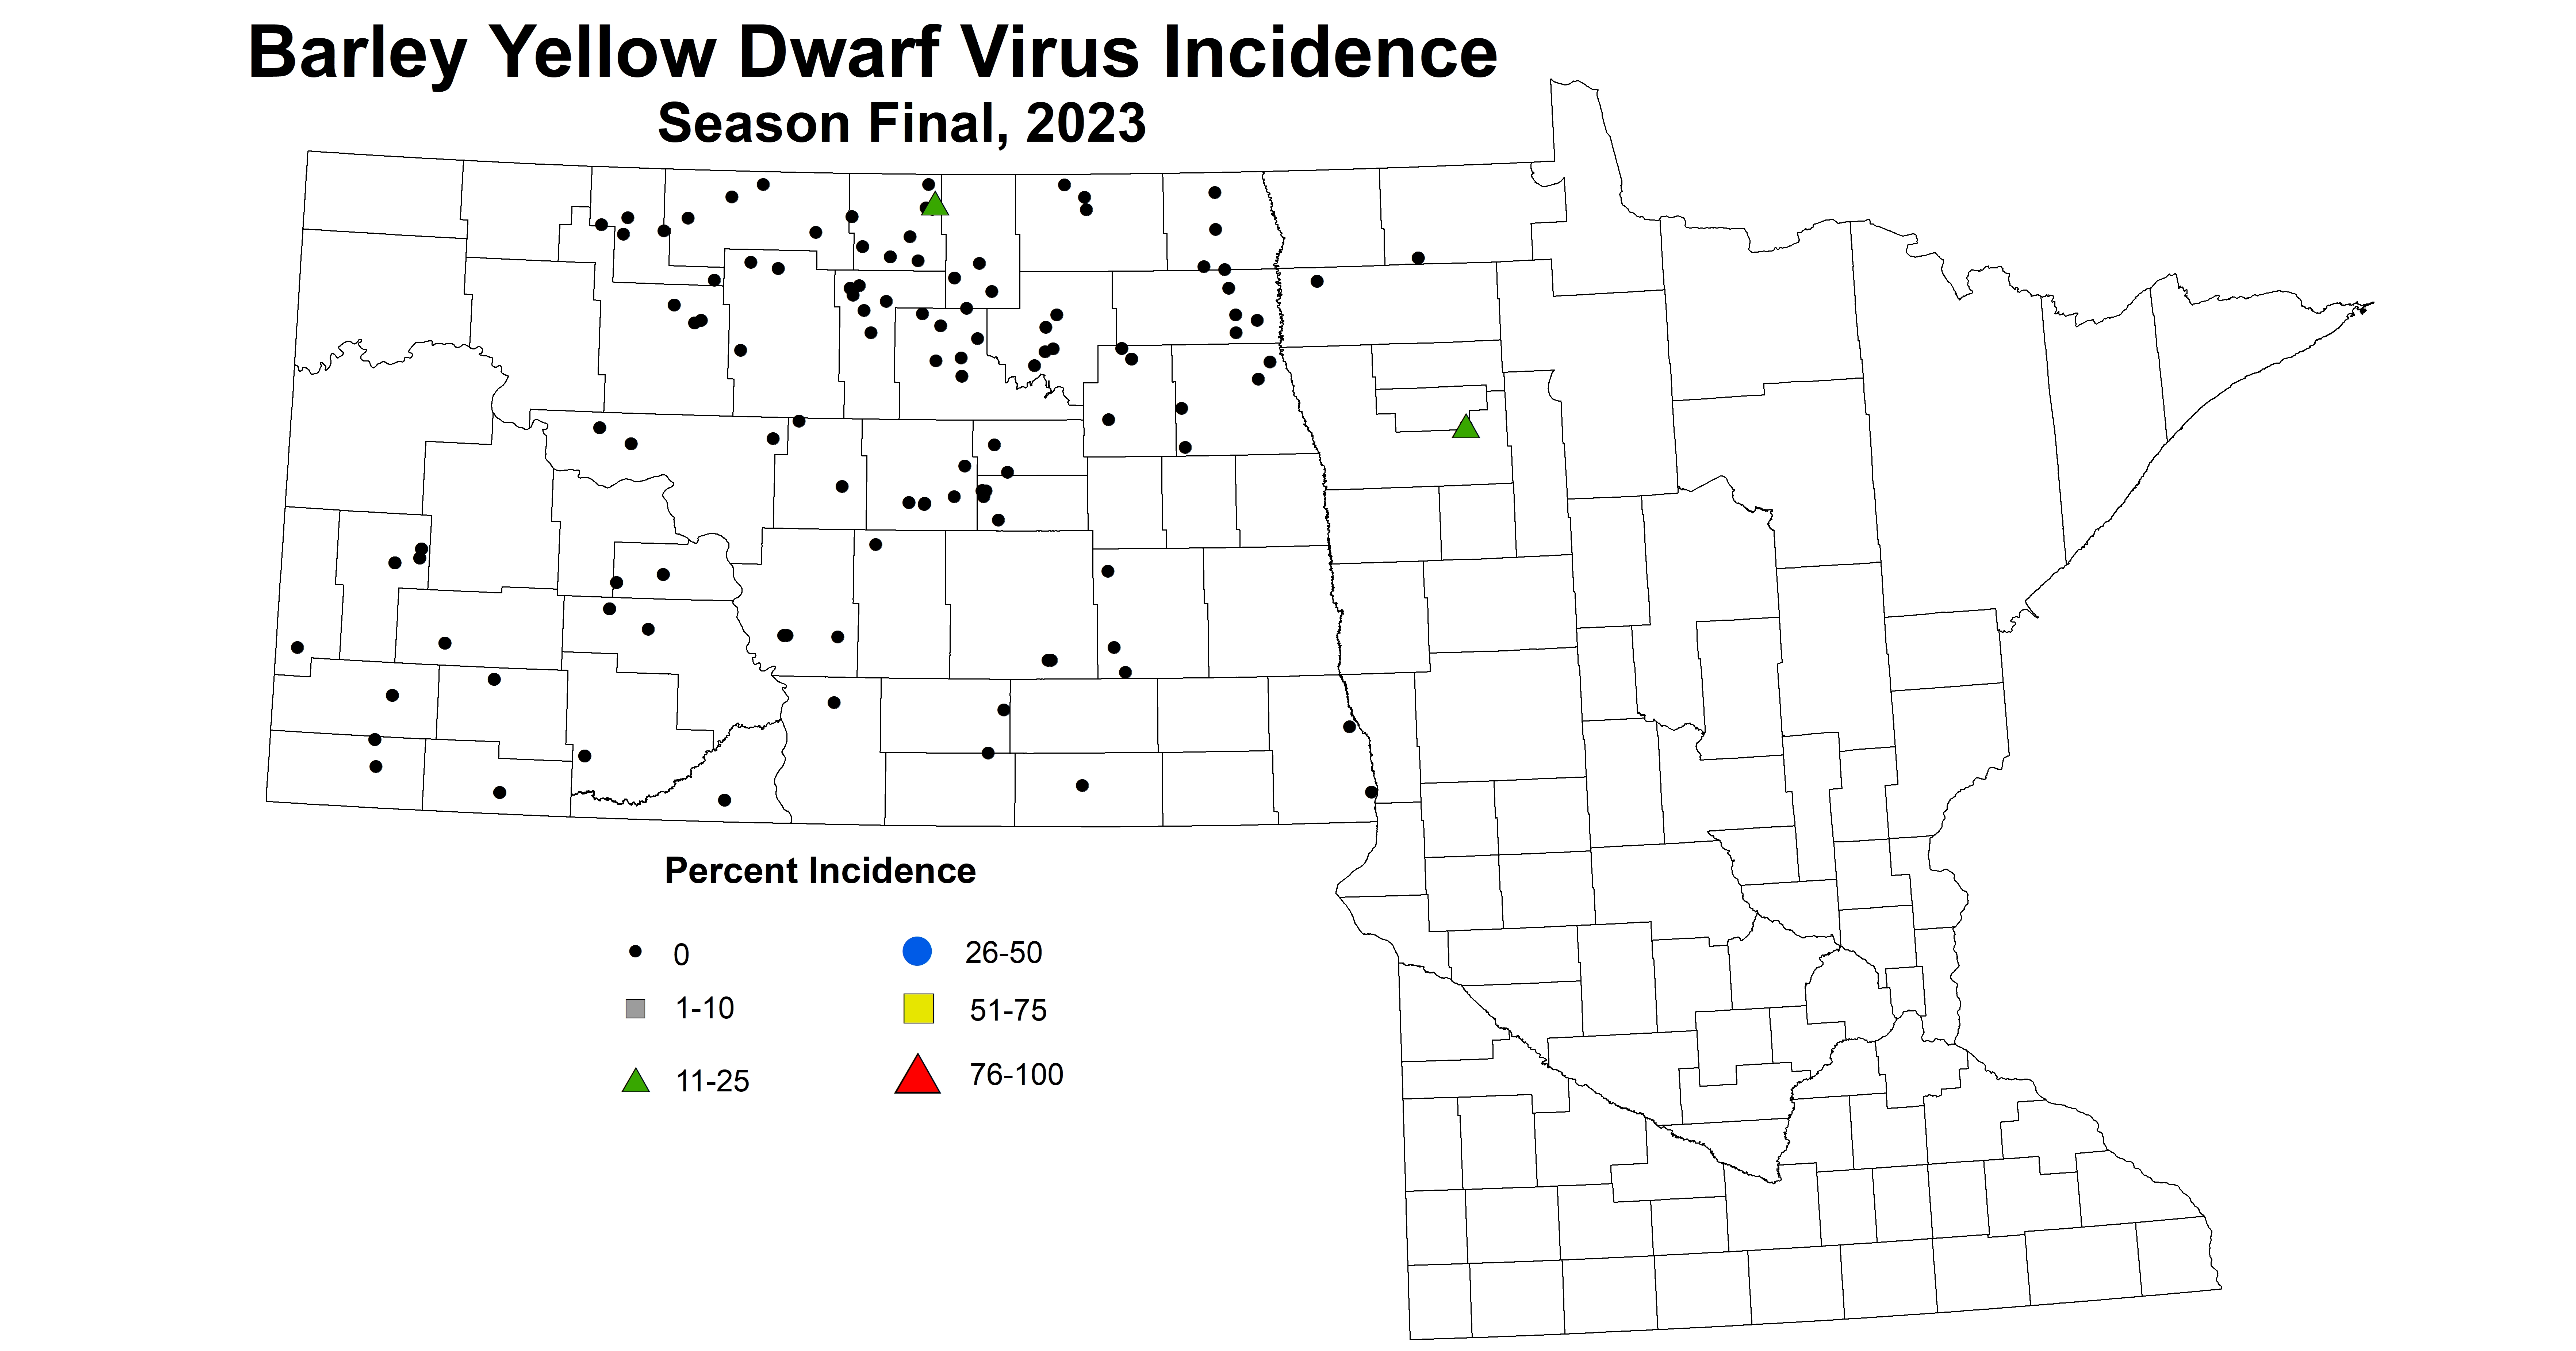 barley yellow dwarf virus incidence season final 2023